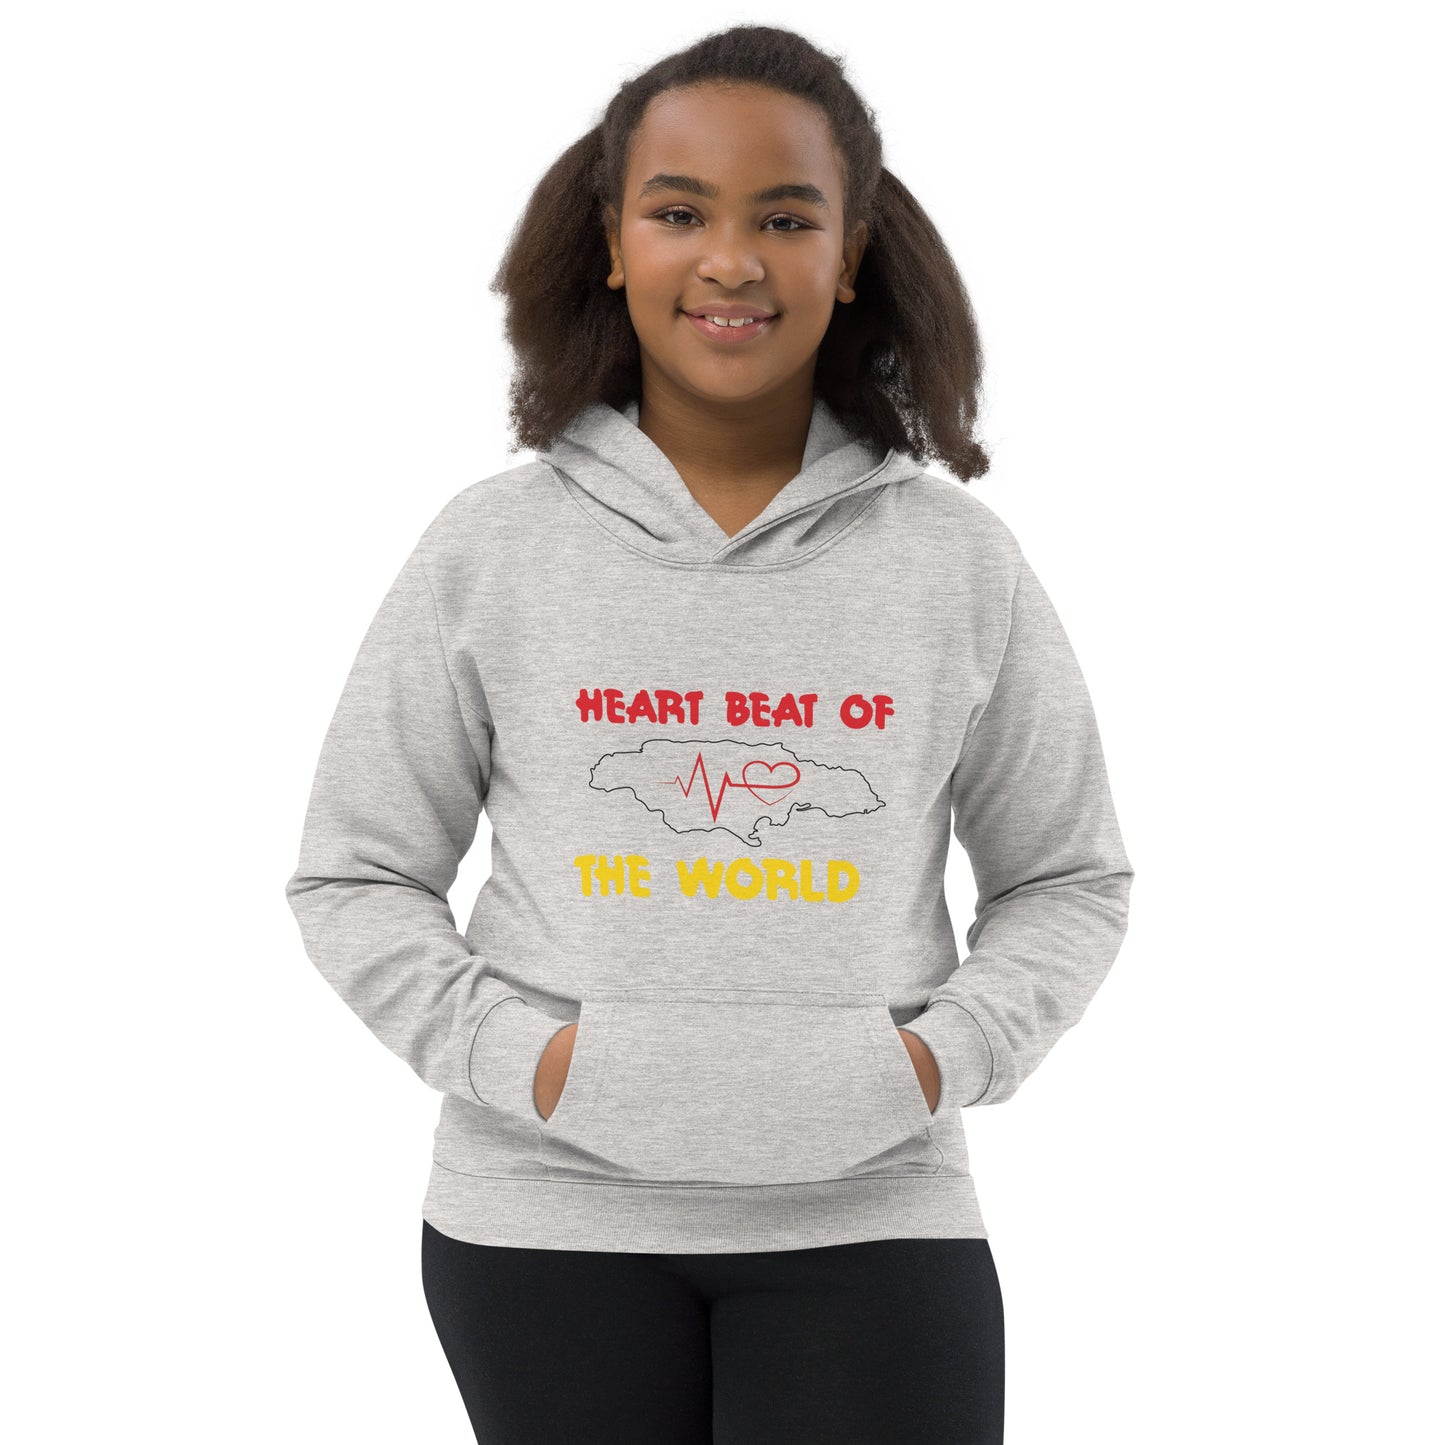 Youth "Heartbeat" Hoodie